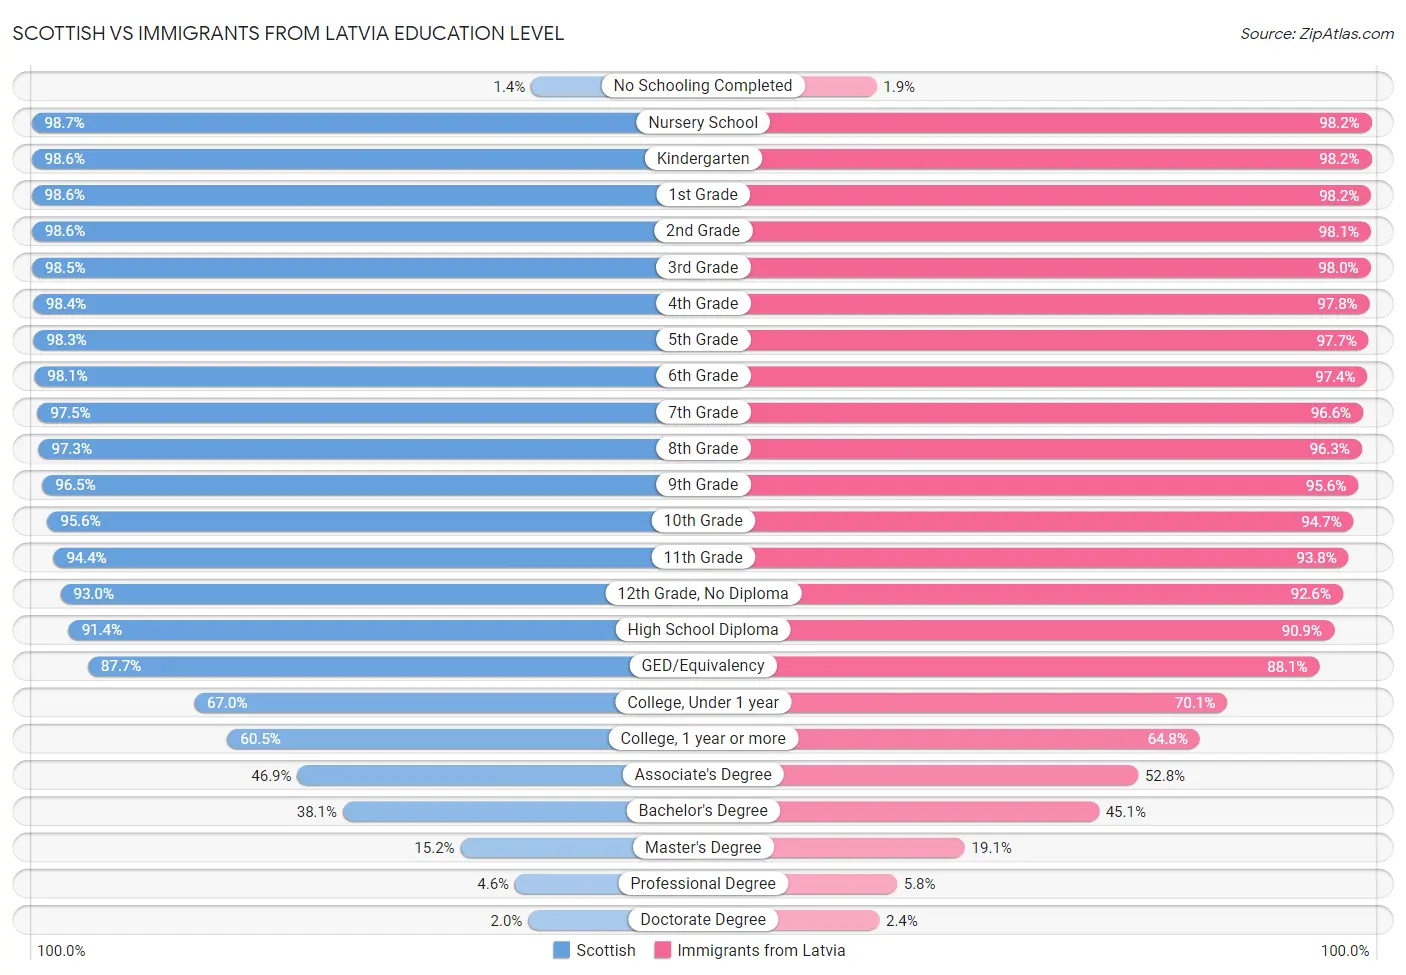 Scottish vs Immigrants from Latvia Education Level